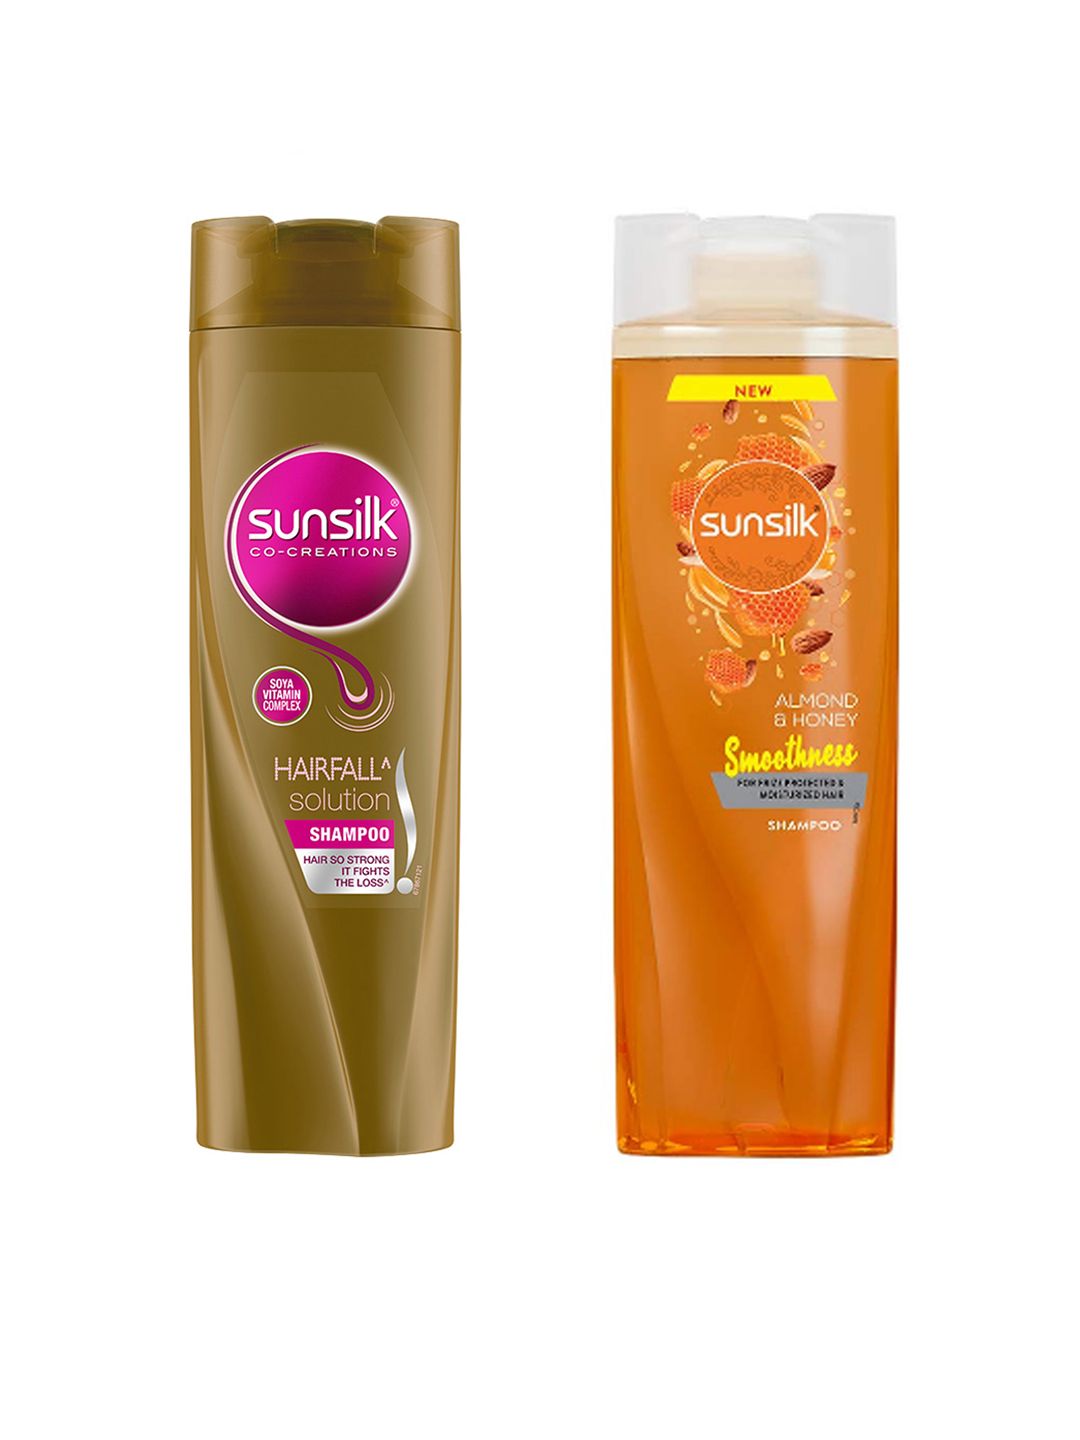 Sunsilk Set of 2 Shampoos Price in India